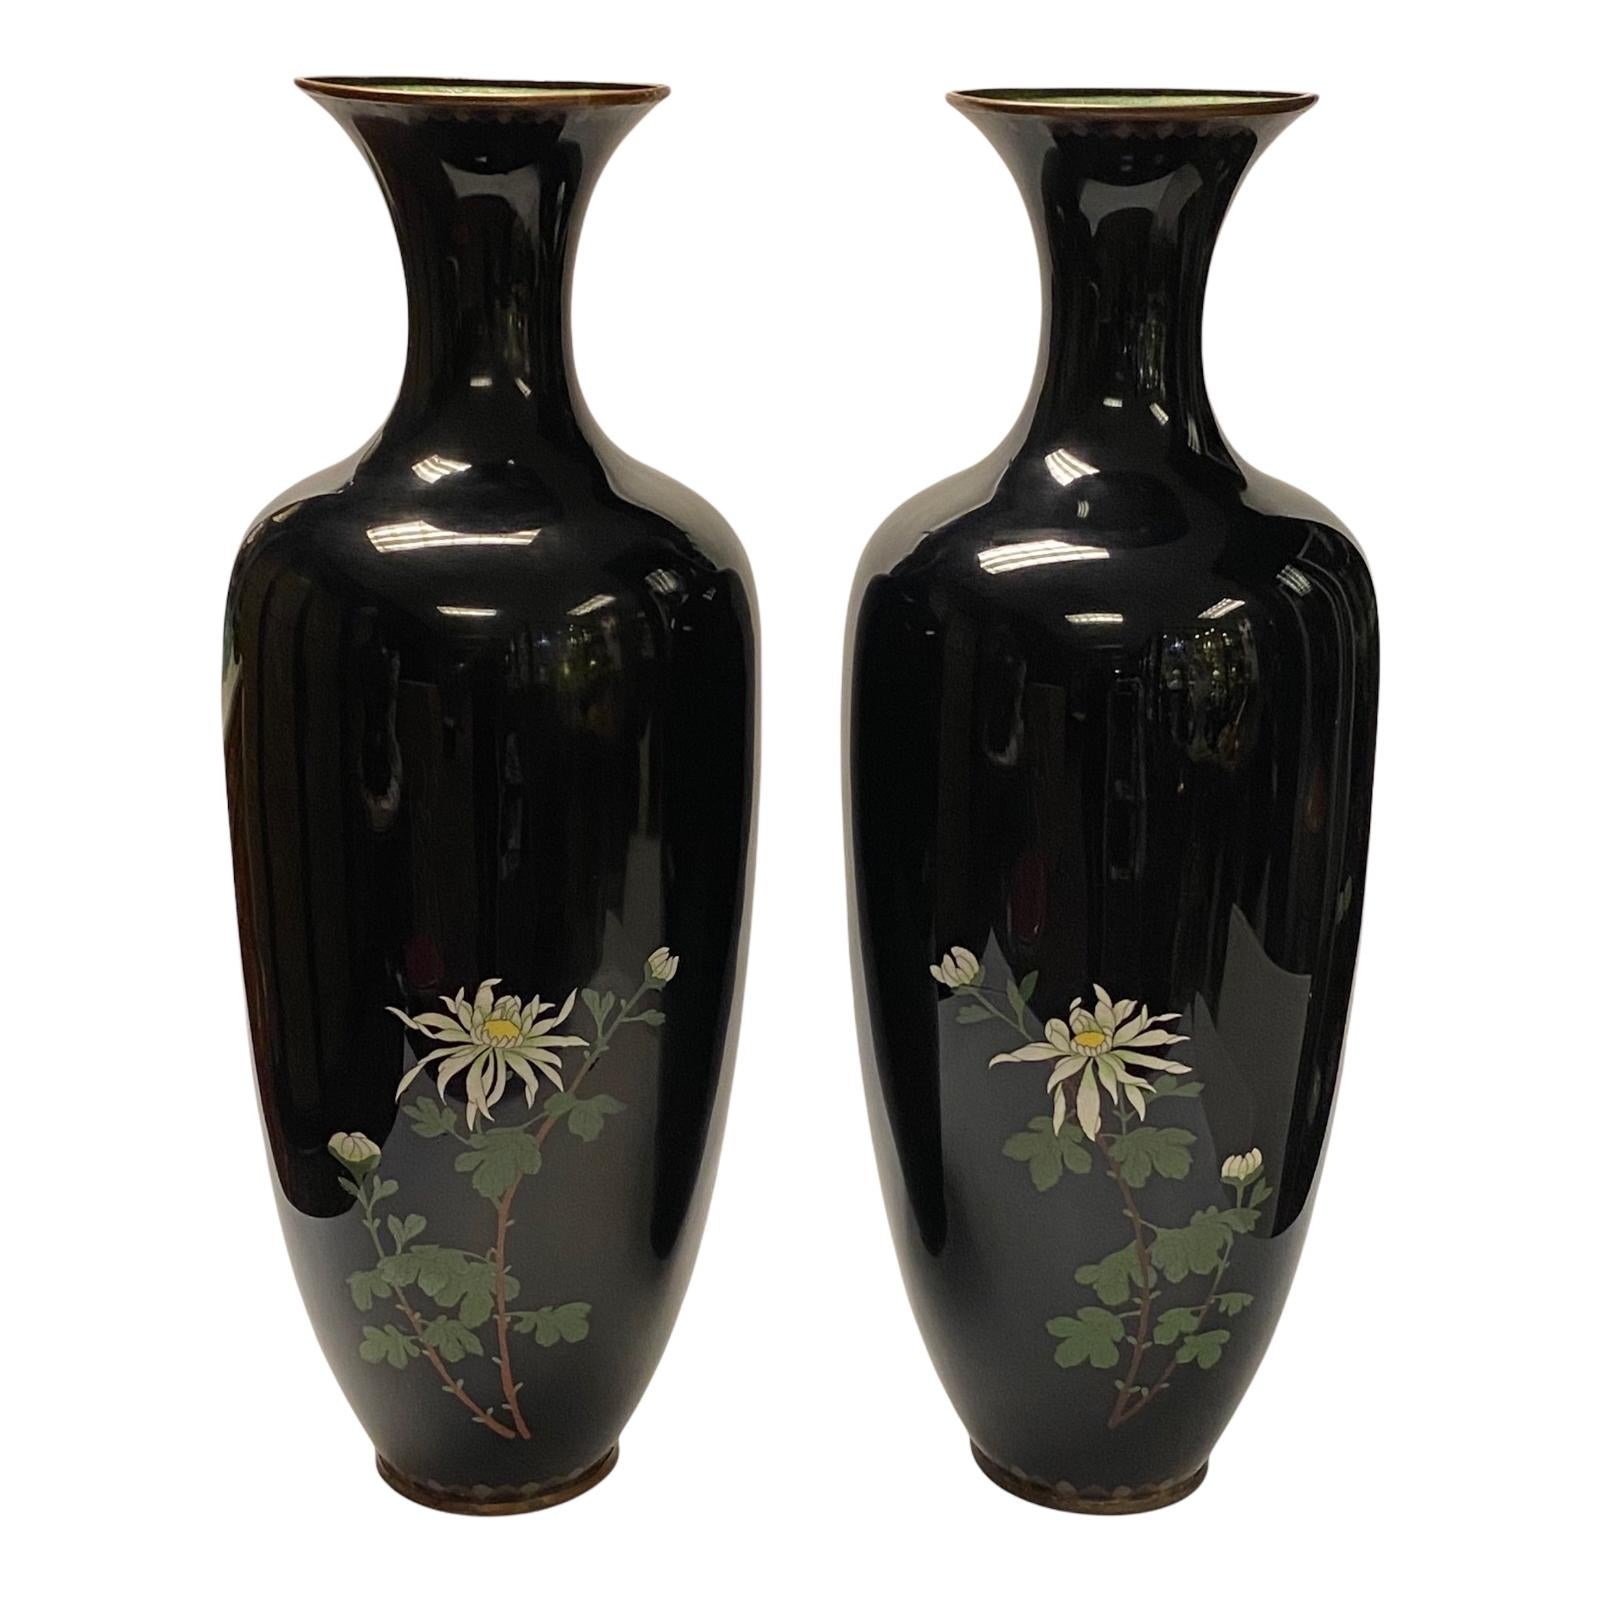 Pair of Large 19 century Meiji period floral decorated Japanese Cloisonné vases.